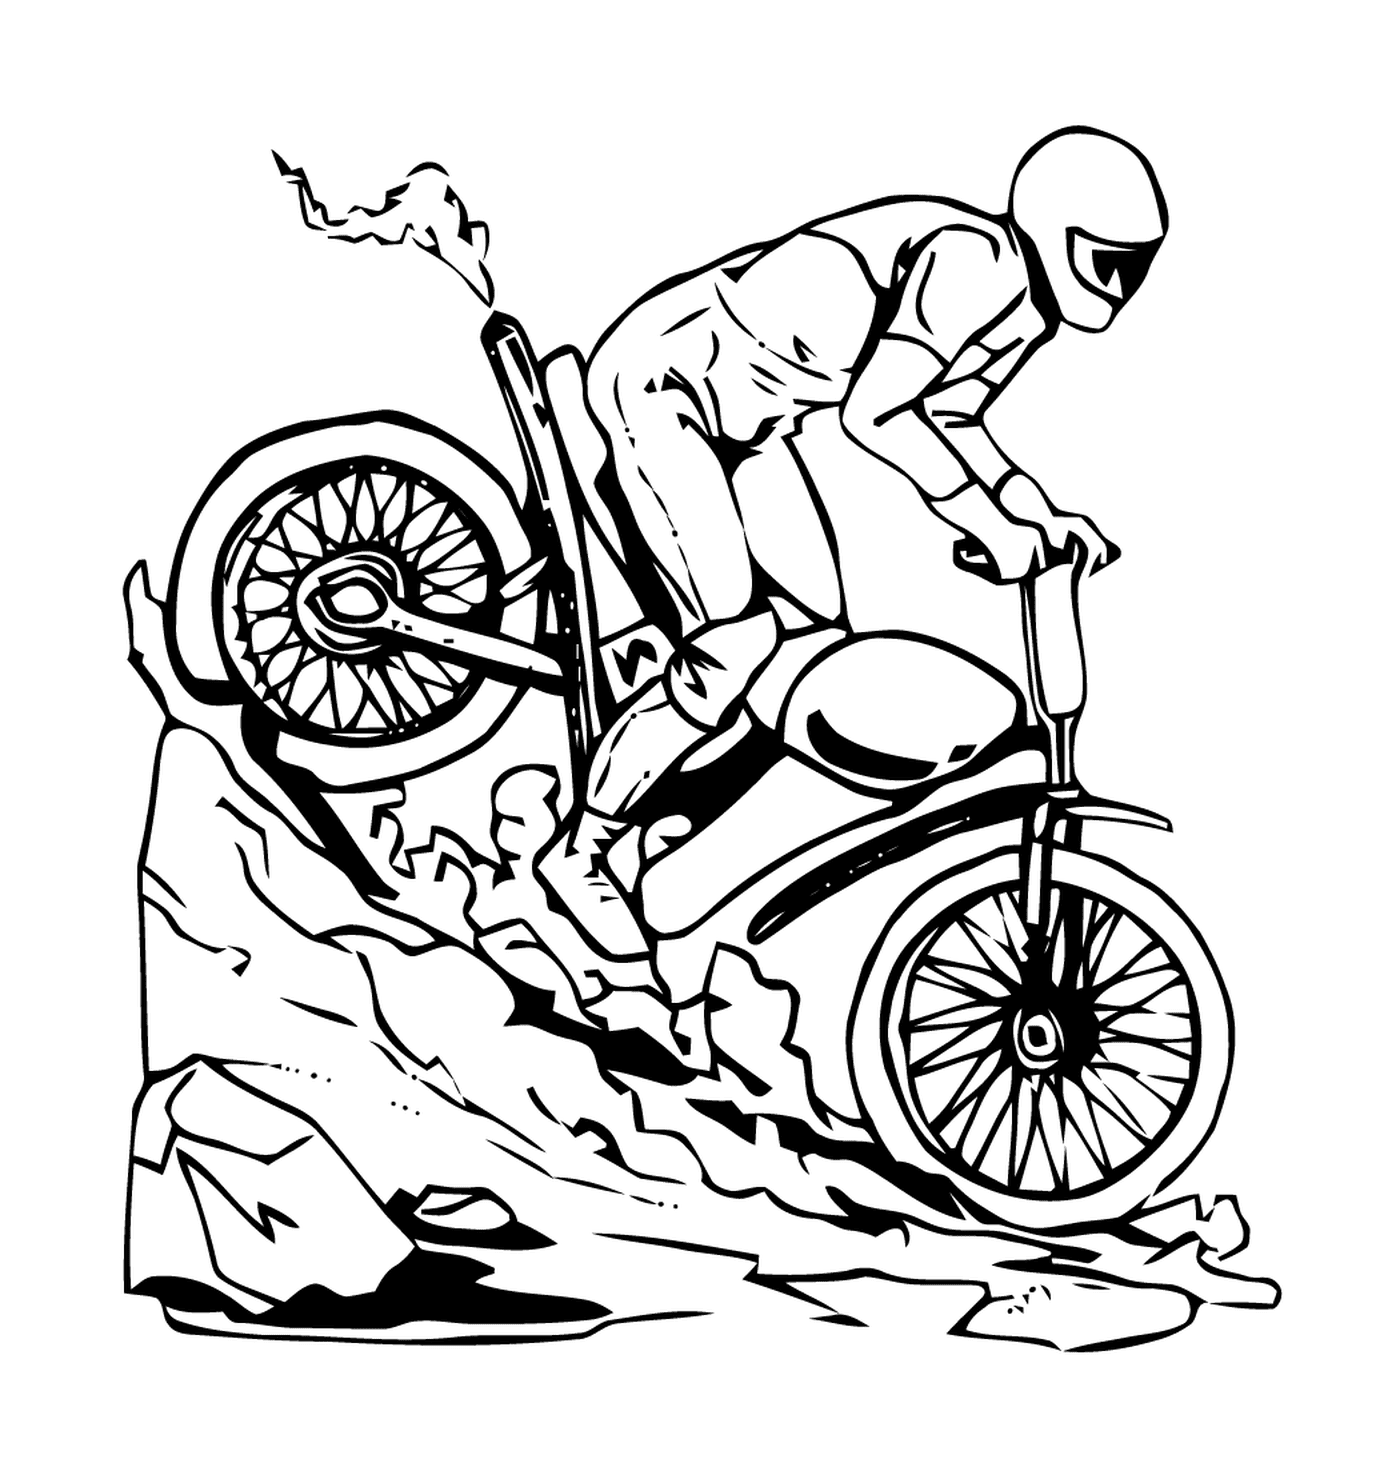  Мужчина на велосипеде идёт вниз по холму 